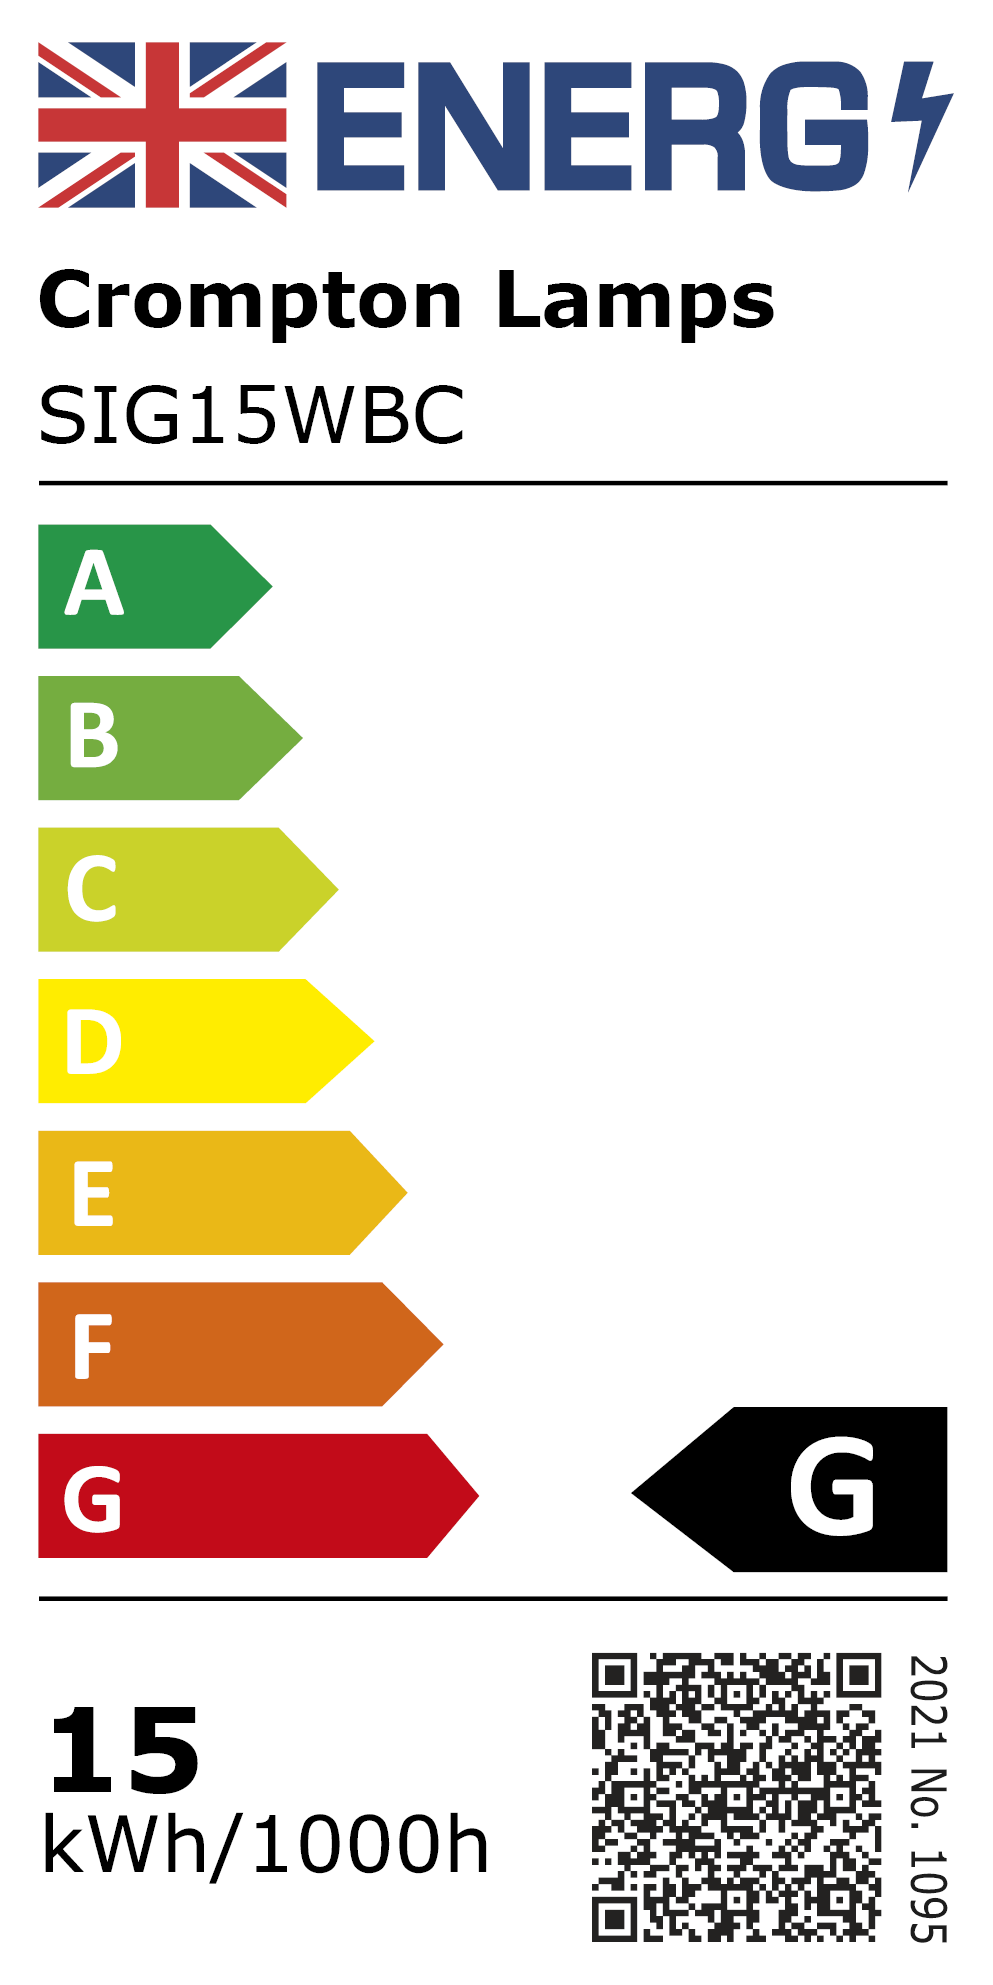 New 2021 Energy Rating Label: Stock Code SIG15WBC